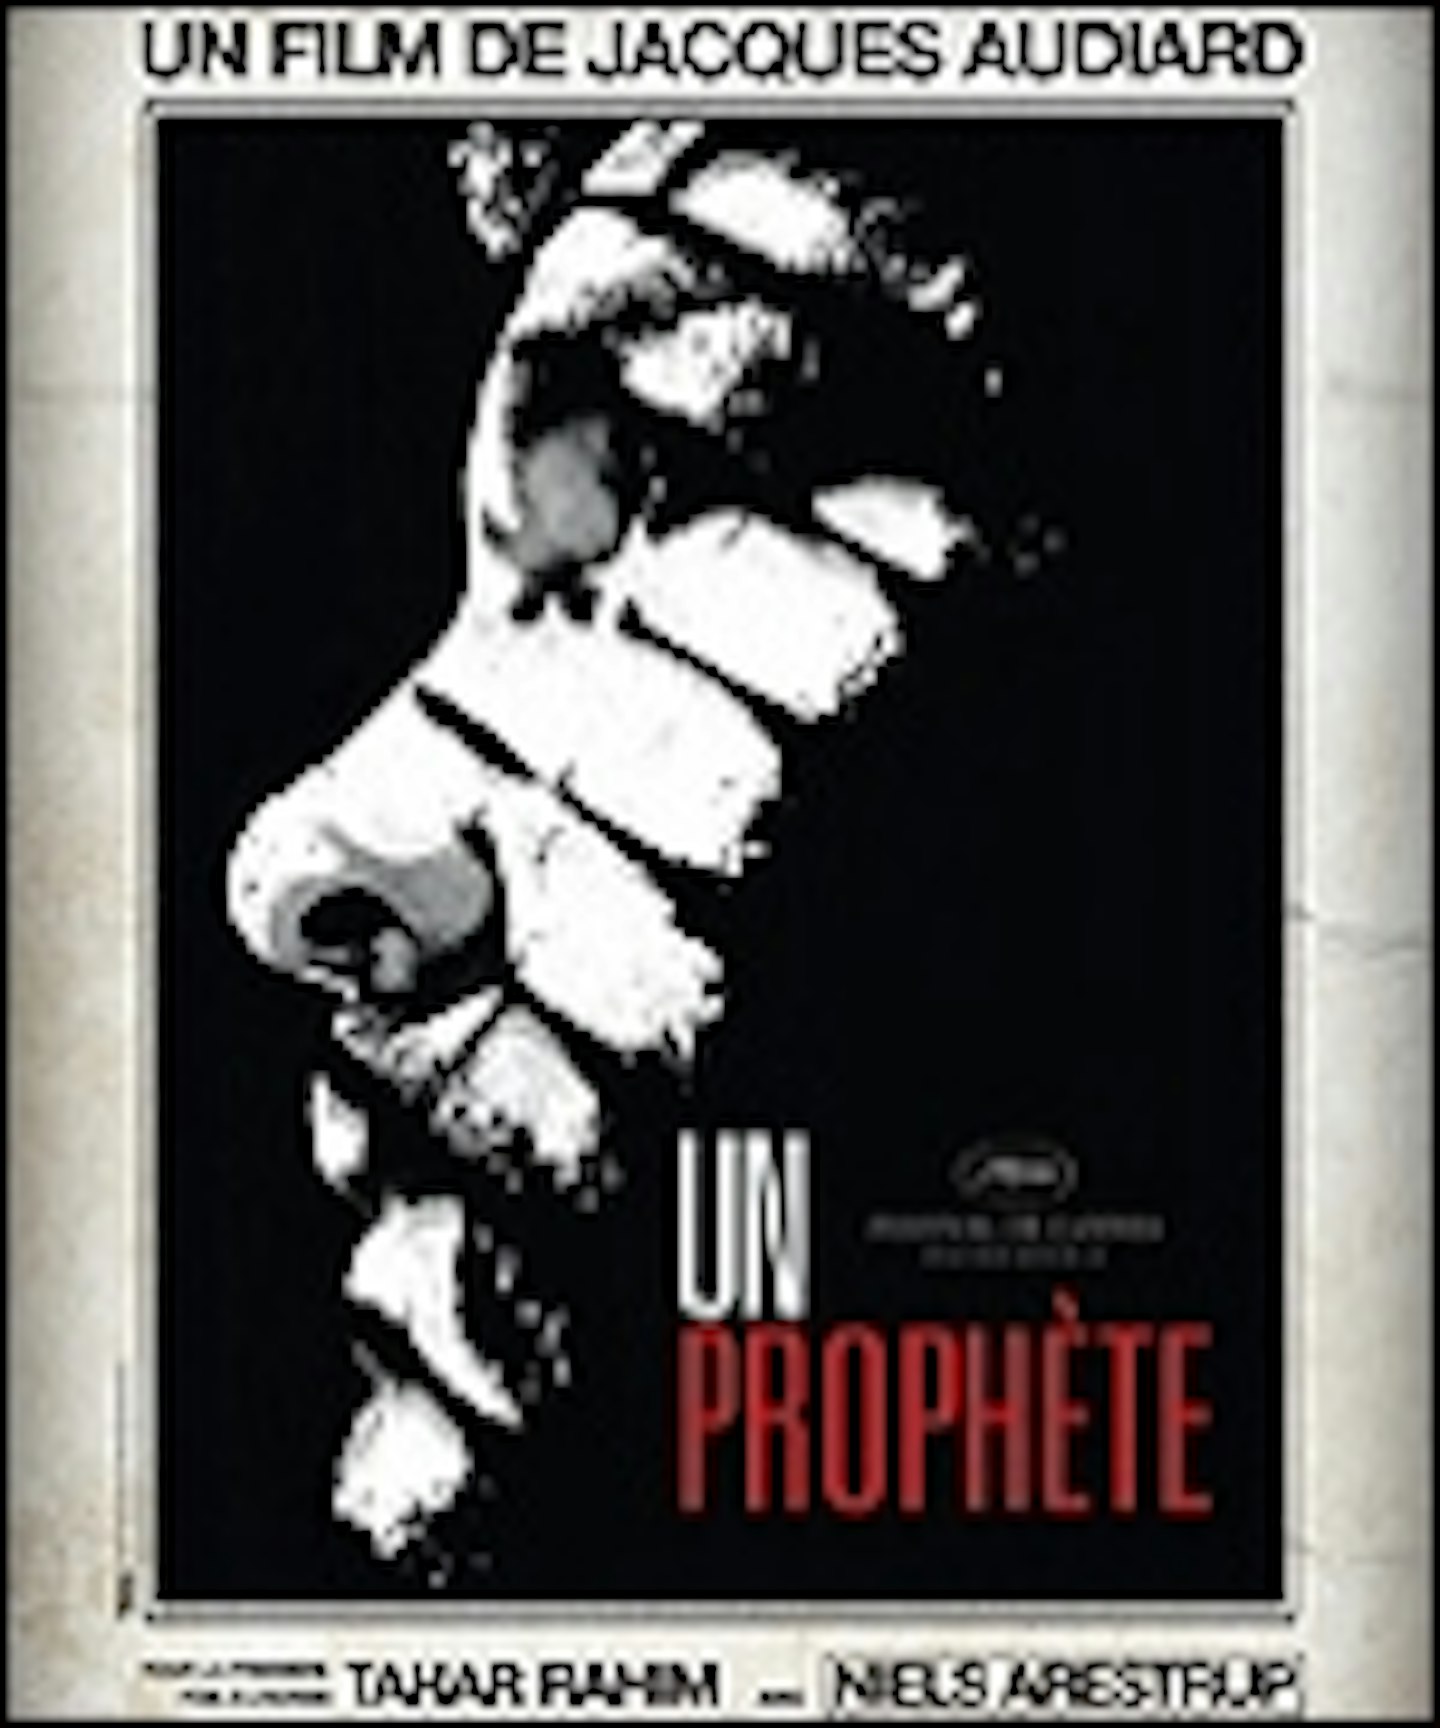 Trailer For Un Prophete Released